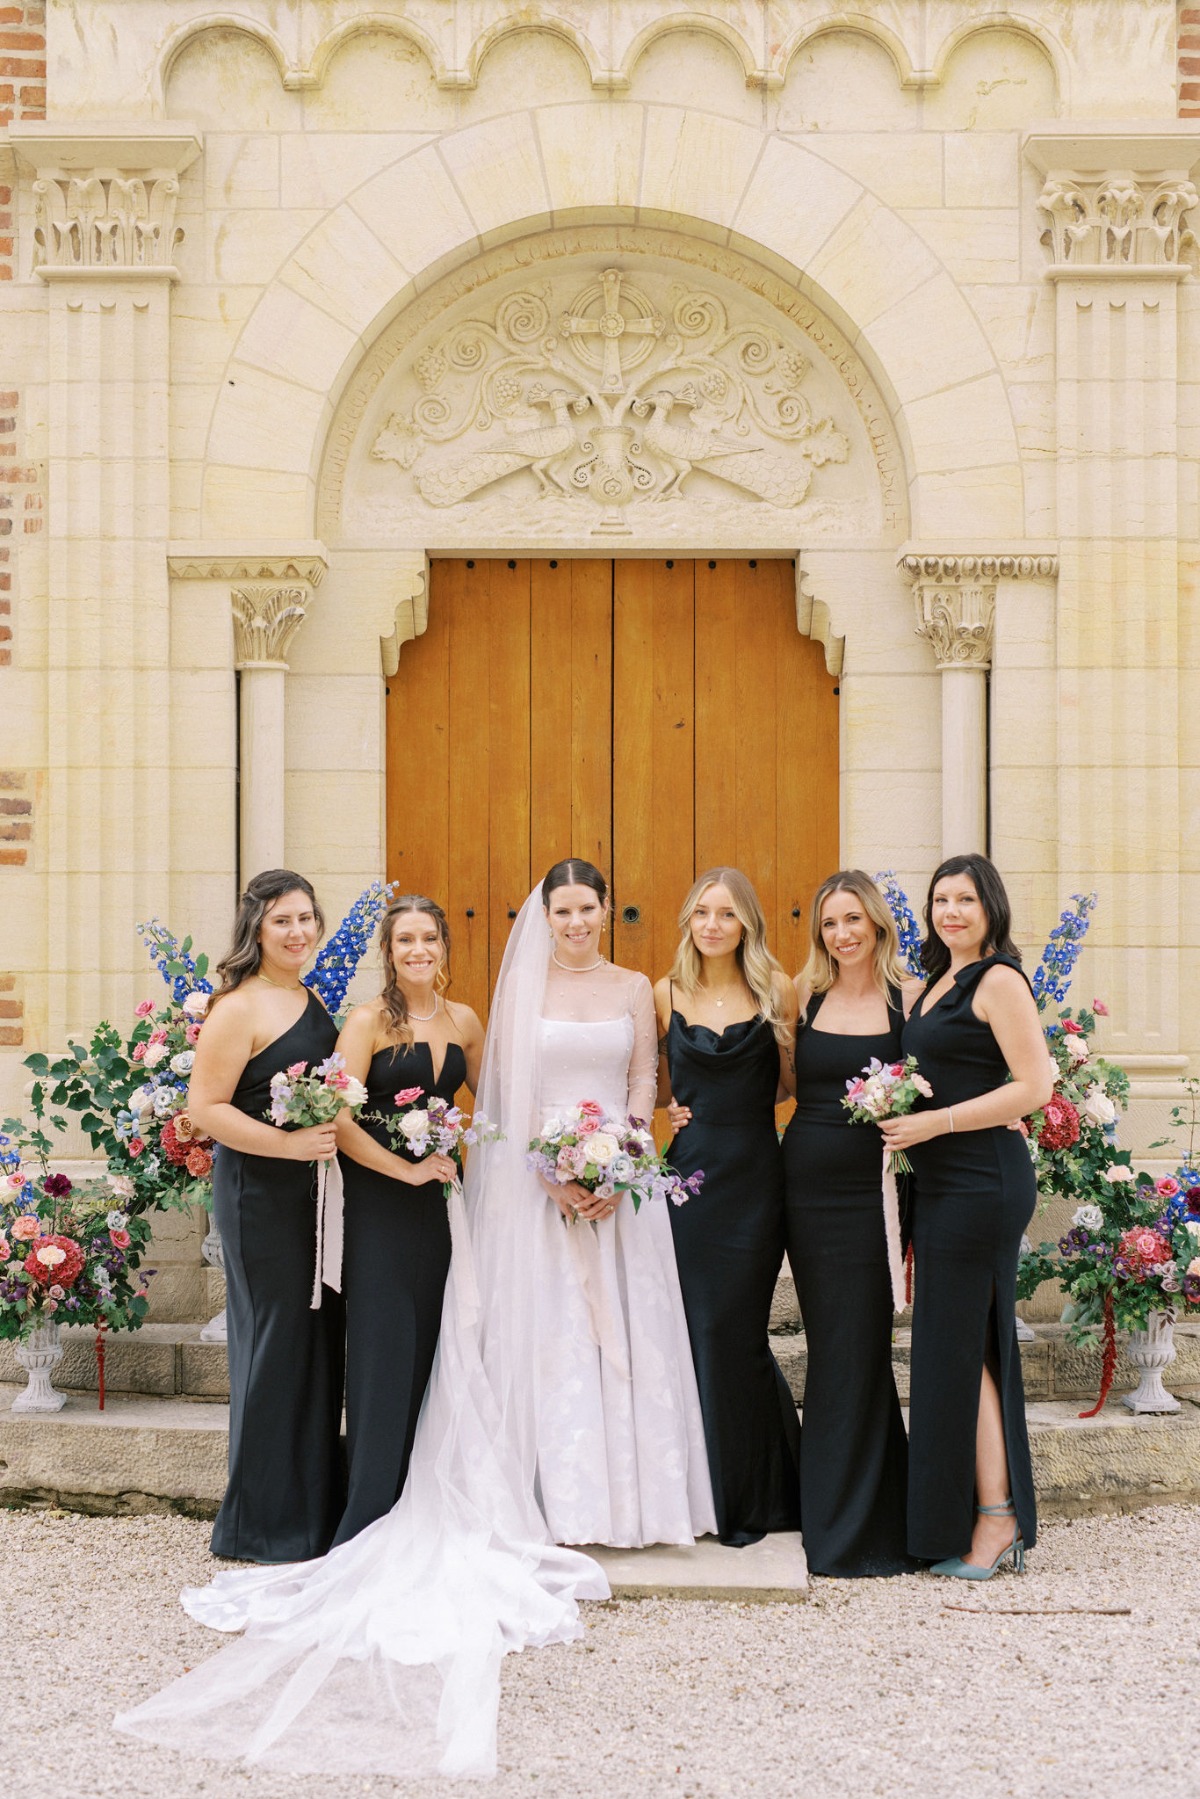 All black bridesmaids dresses